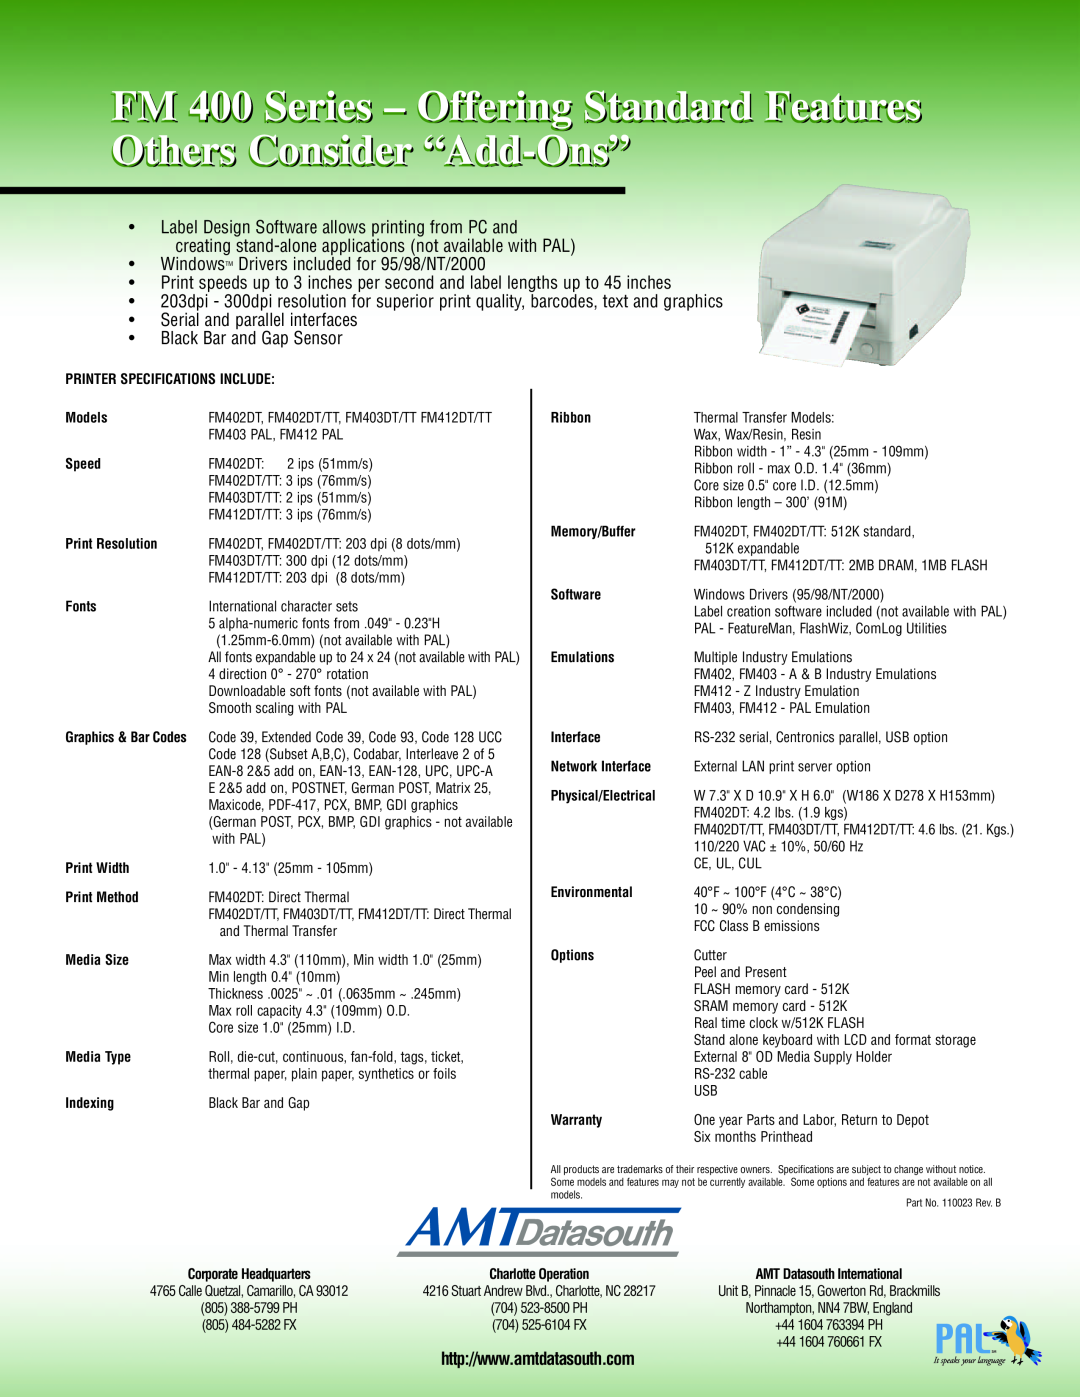 AMT Datasouth FM412 PAL, FM402DT/TT, FM403DT/TT FM 400 Series - Offering Standard Features Others Consider “Add-Ons” 